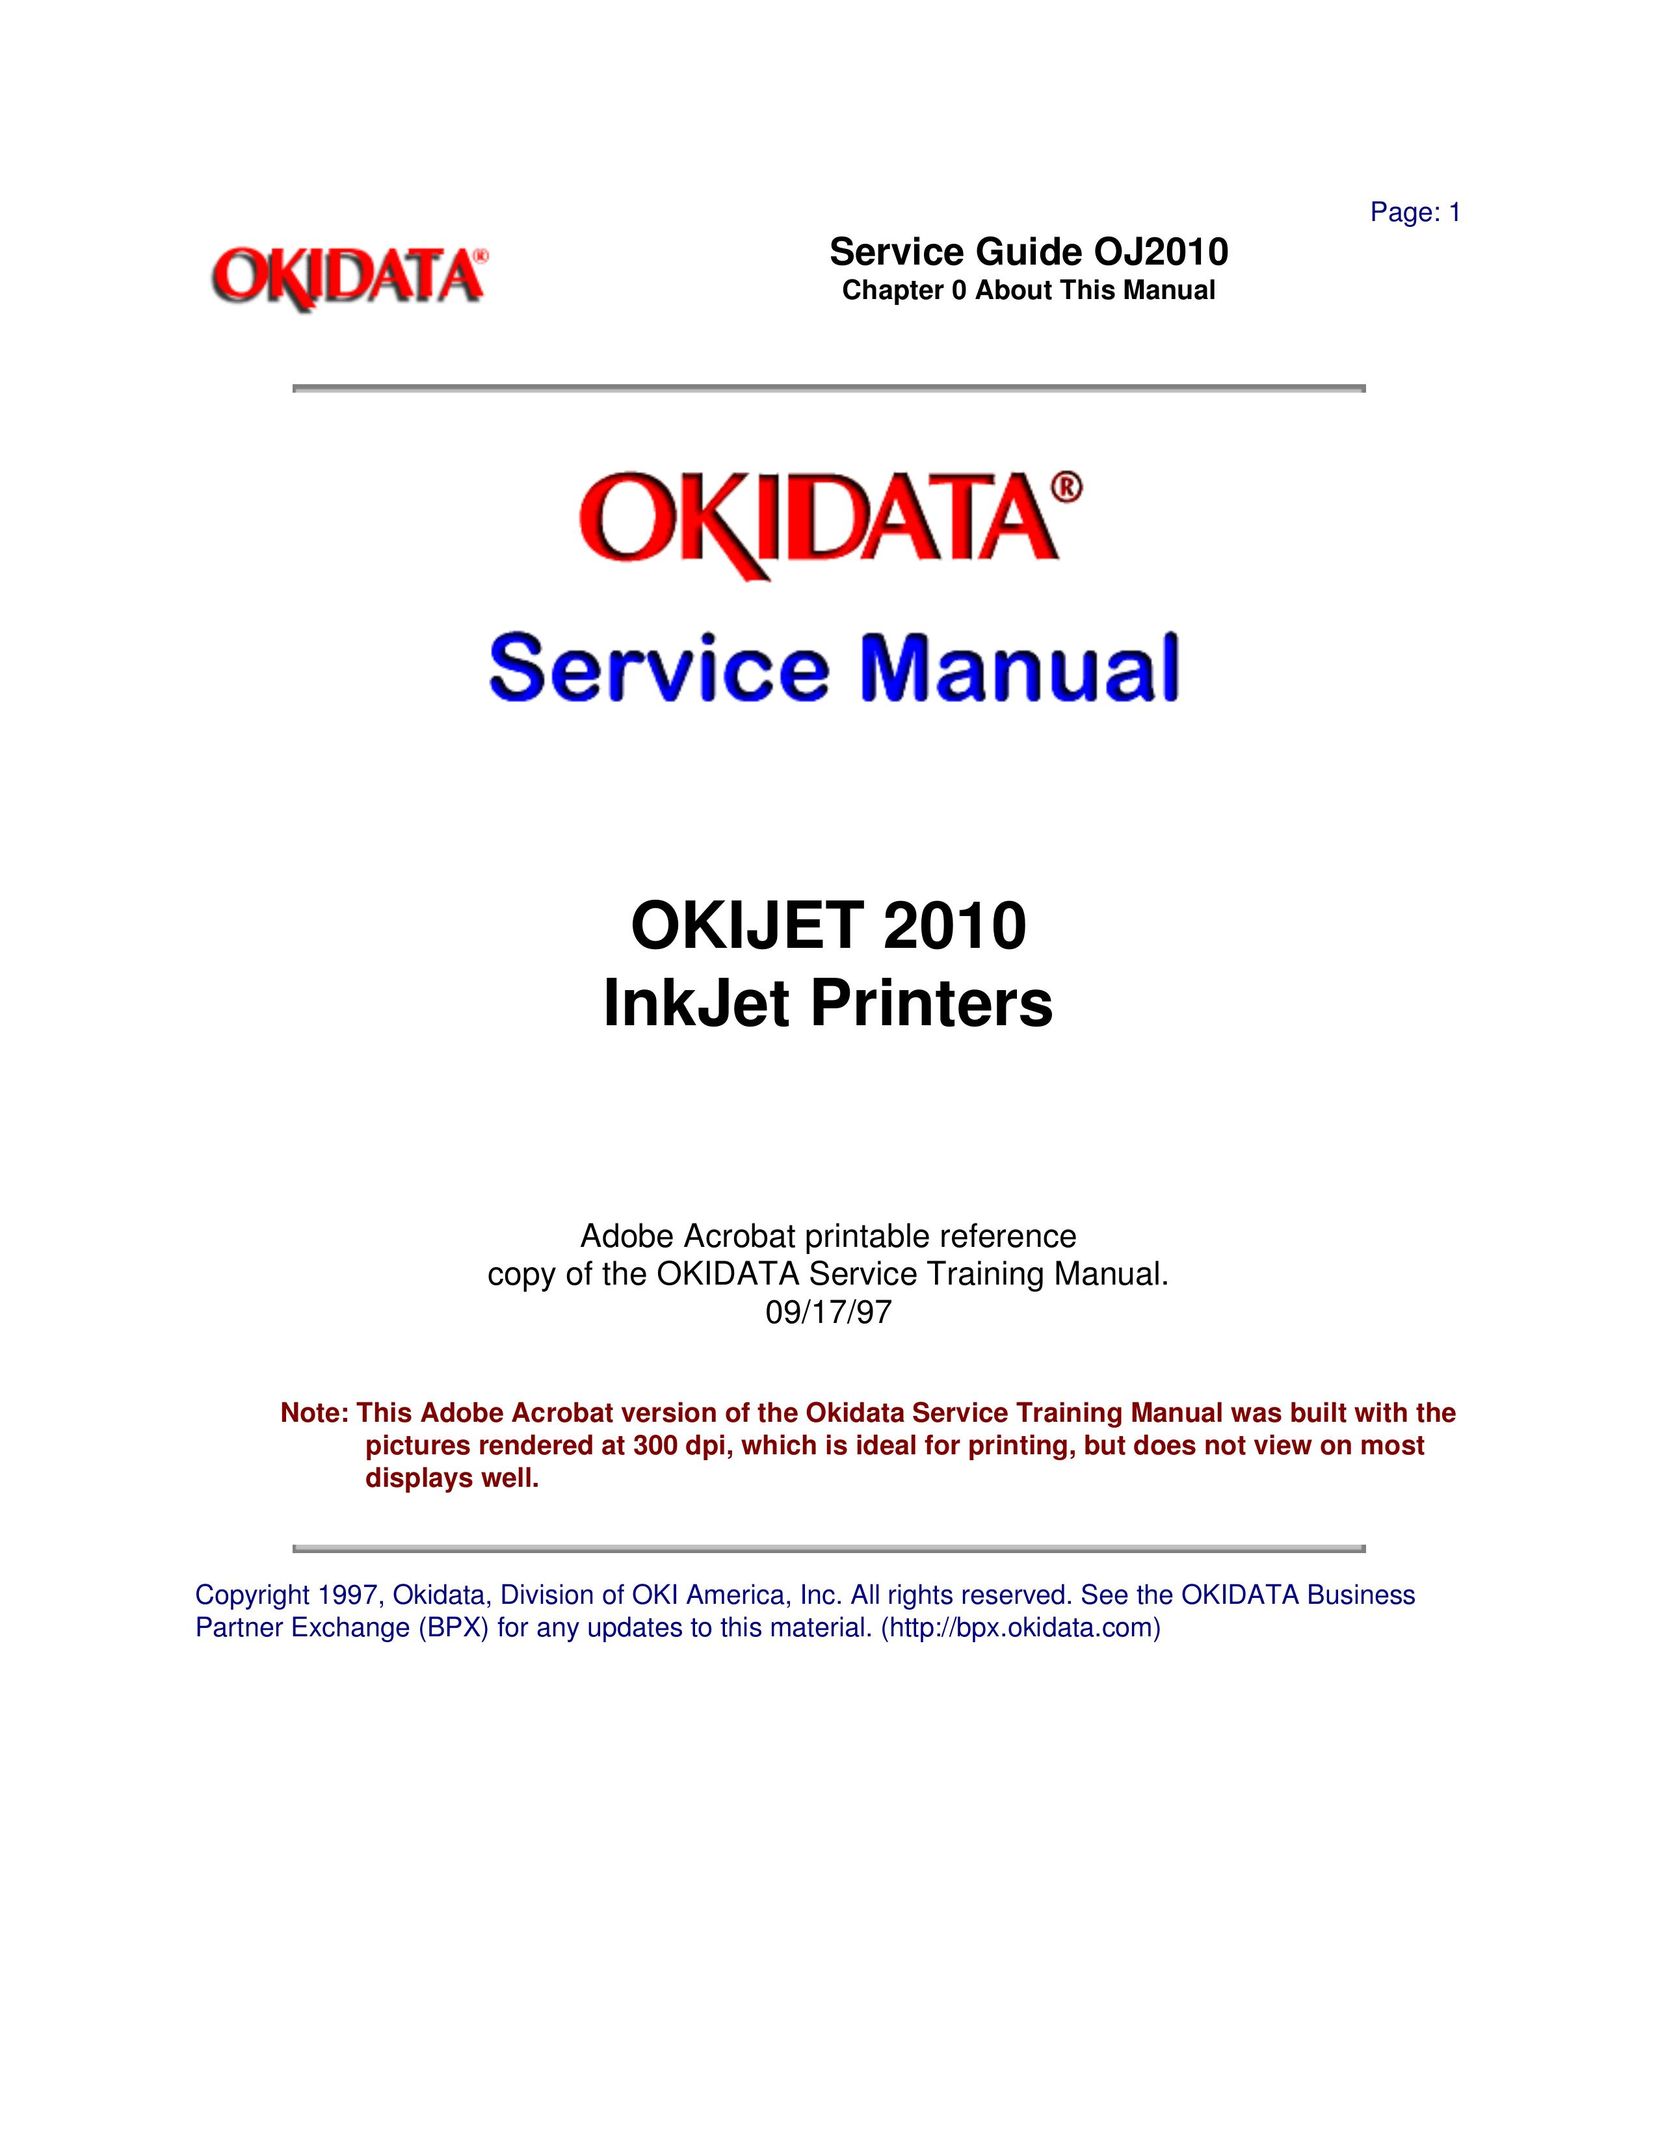 Oki 2010 Printer User Manual